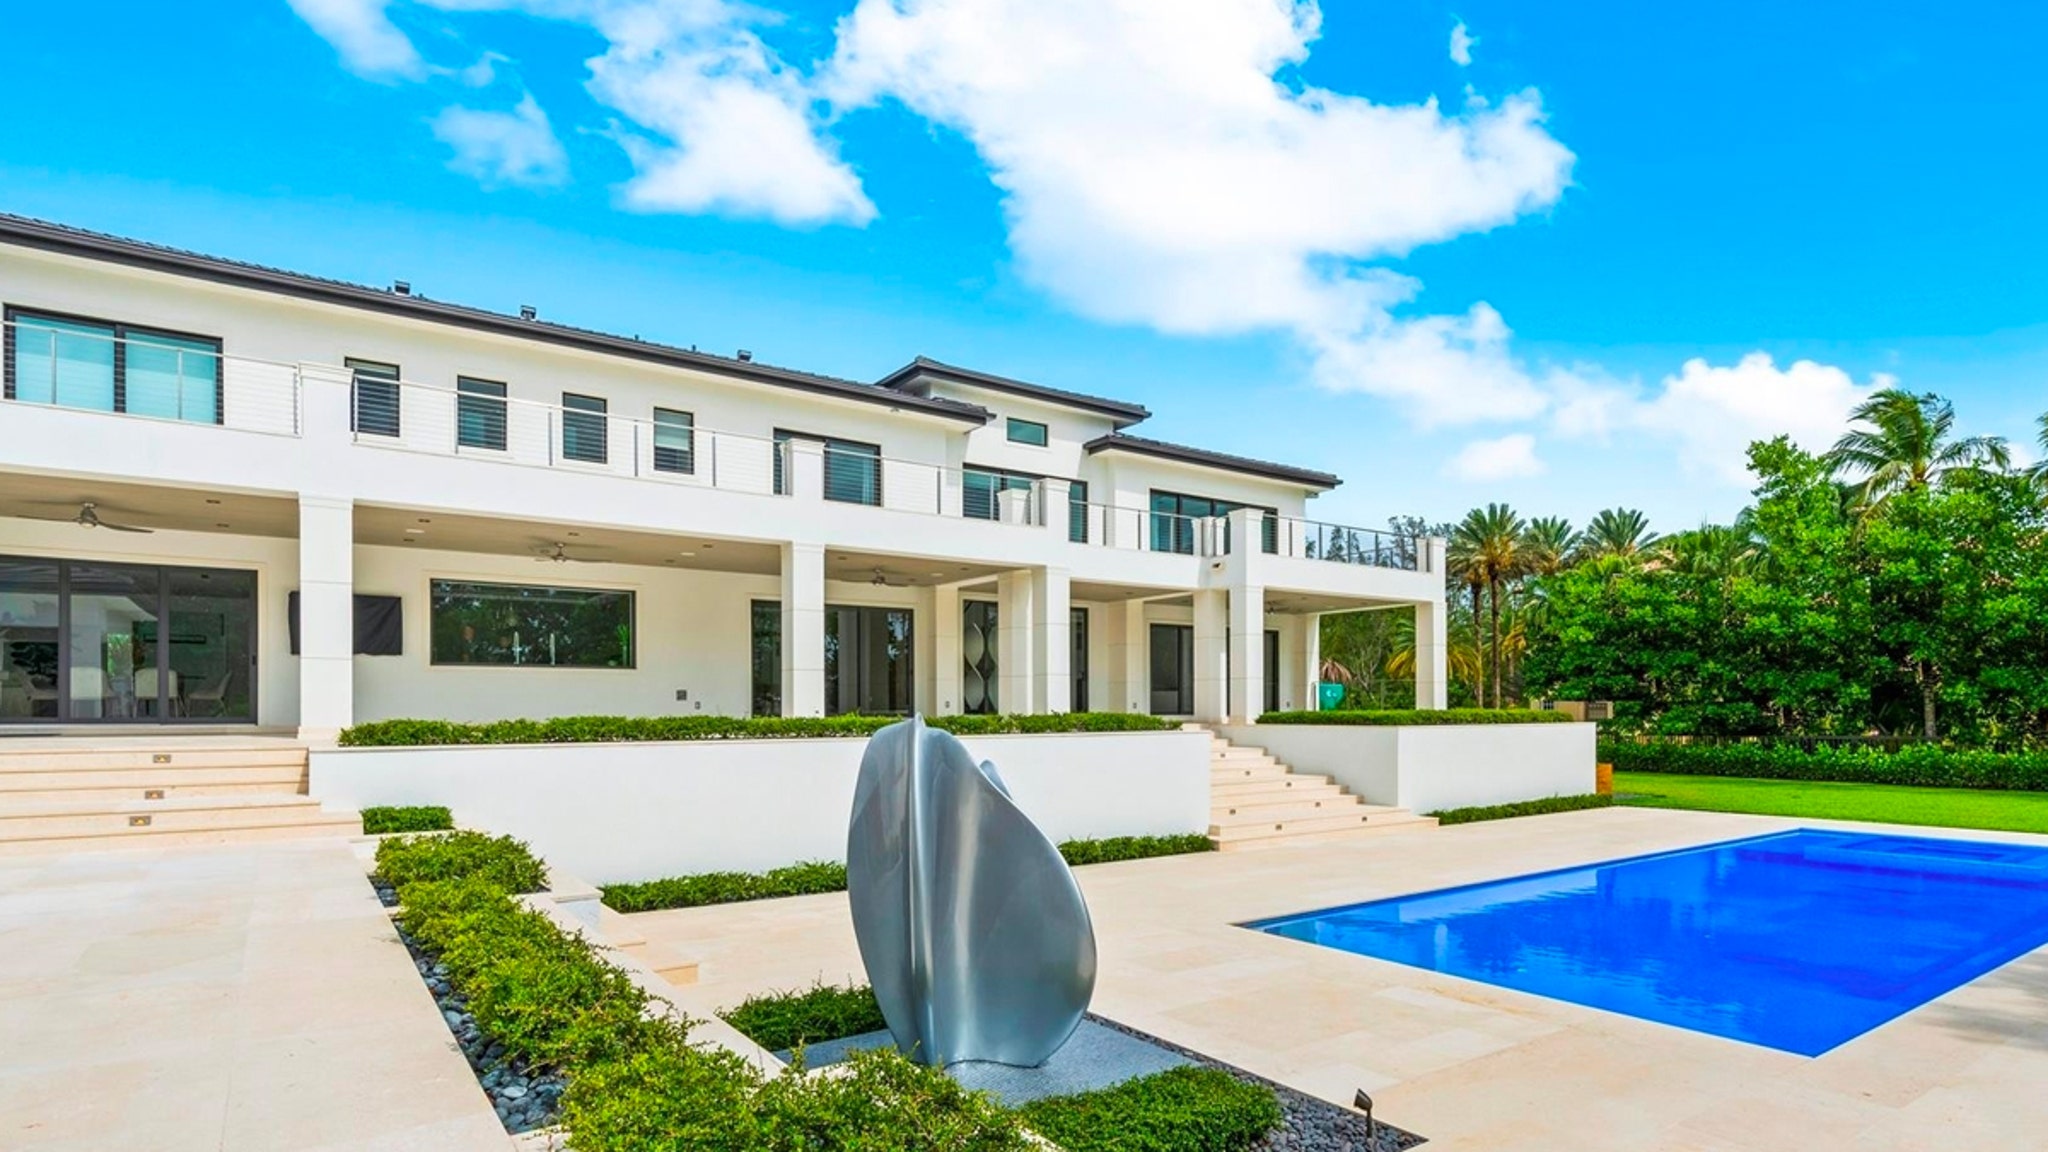 Jeff Bezos' Parents Buy $34 Million Mansion in Florida